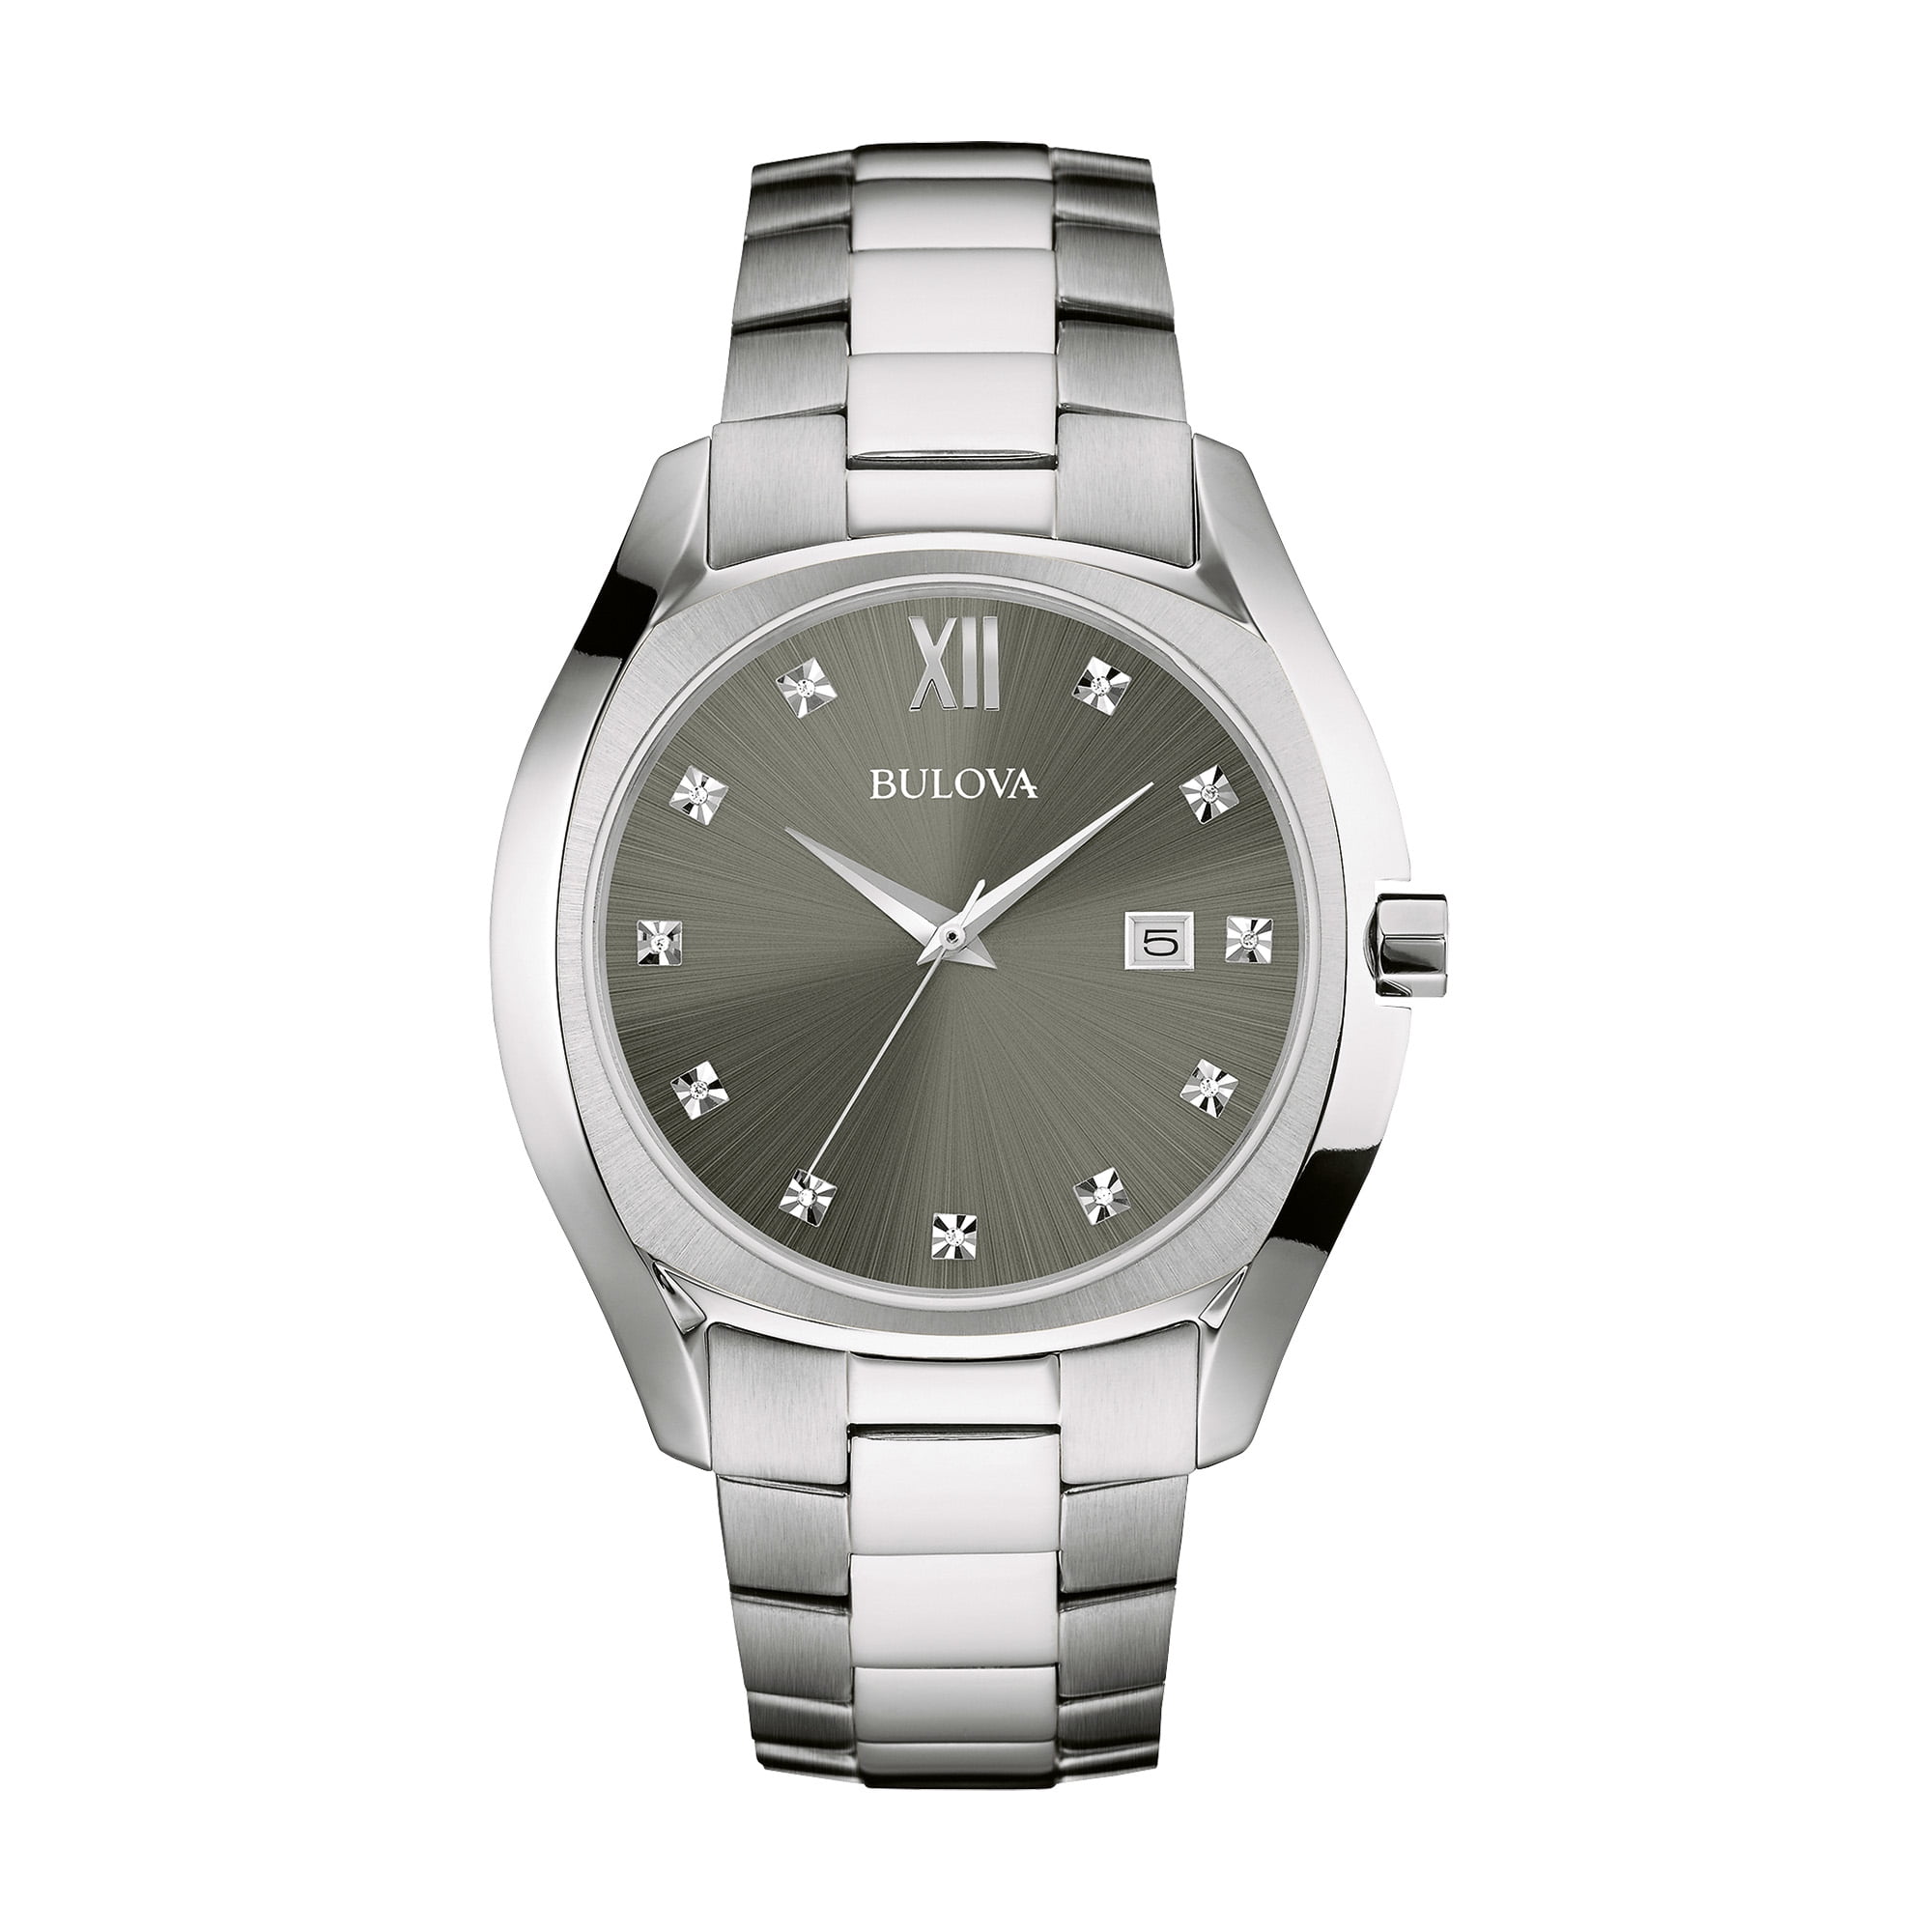 Bulova Men's Classic Stainless Steel Silver-Tone Watch 96B220 